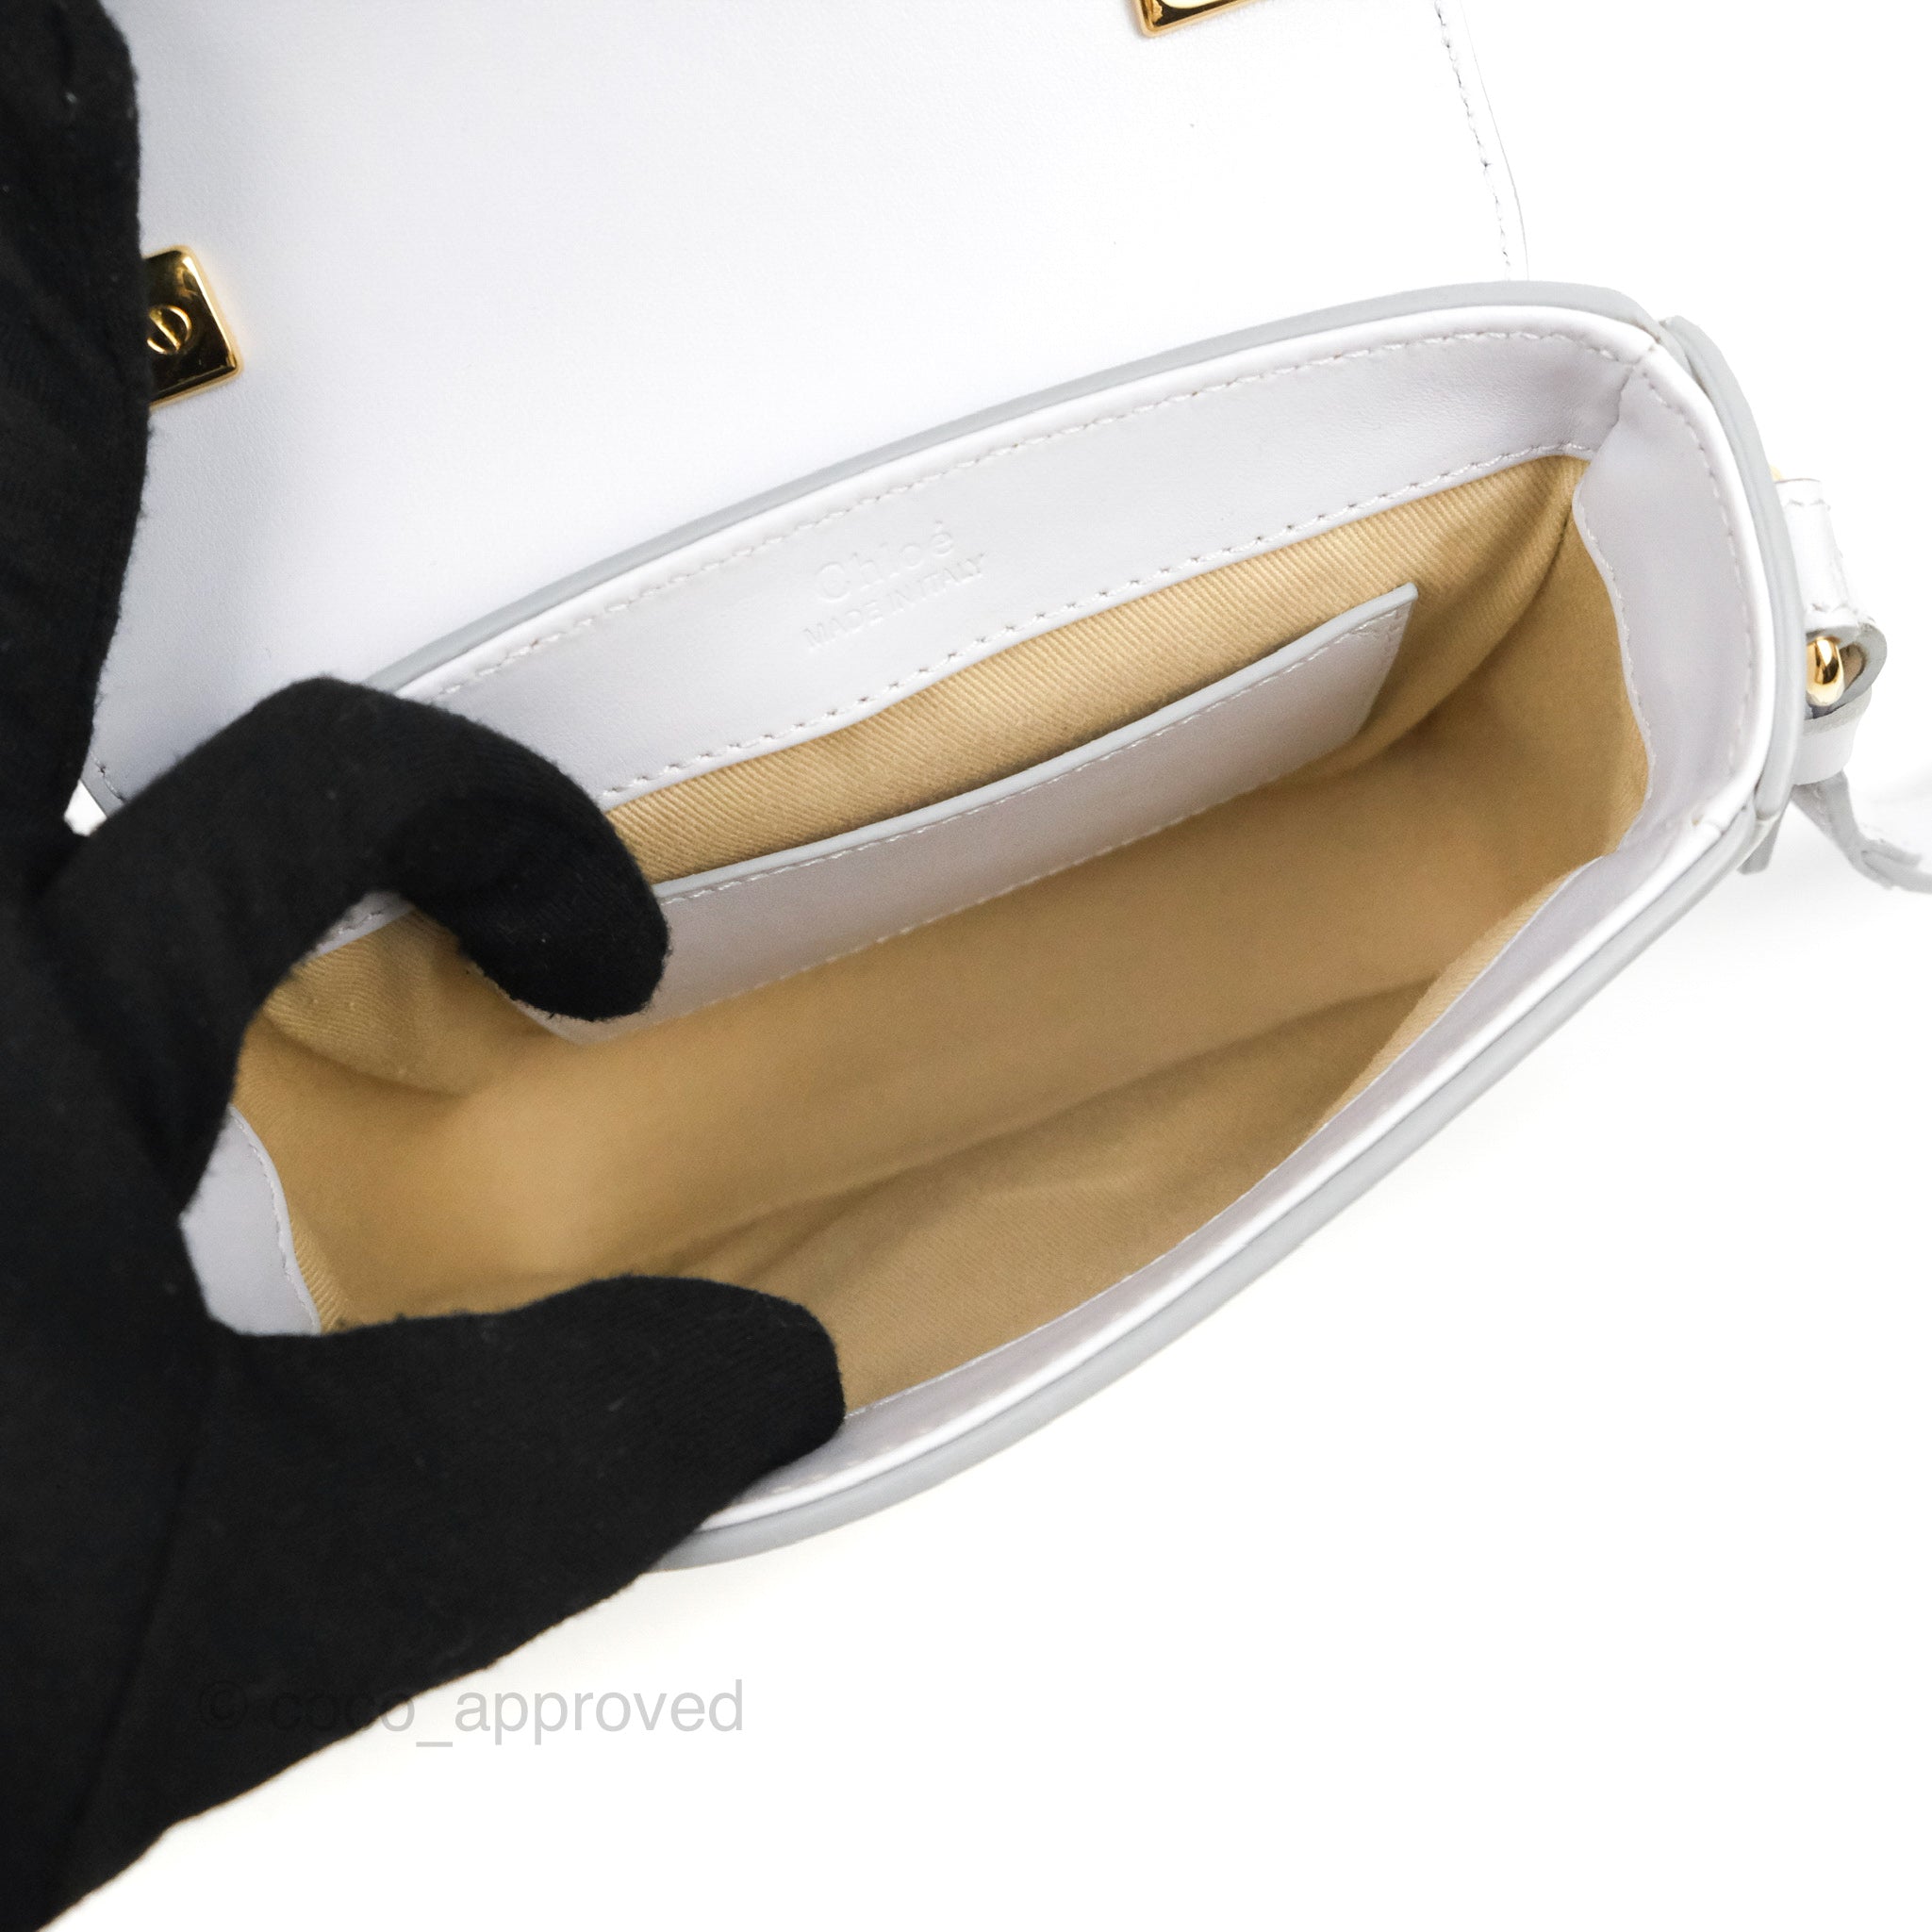 Chloé Chloe Small Nile Bag in Green Leather ref.471410 - Joli Closet